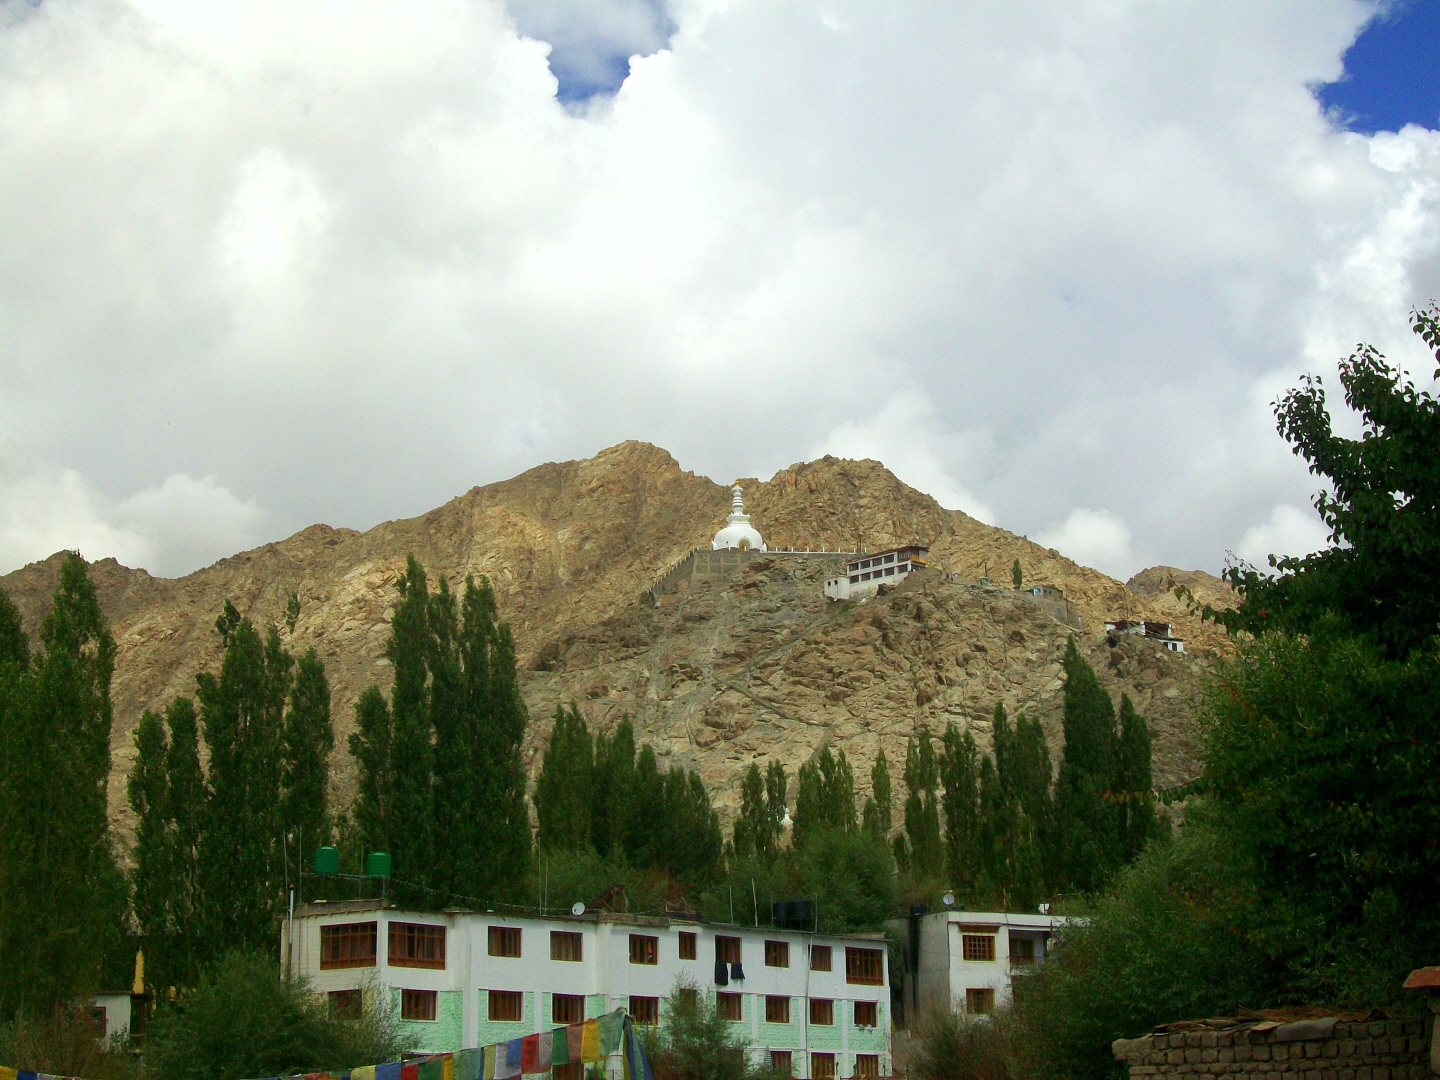 Stupa Gompa (Monastery) on Mountain - a hotel below - Leh, Ladakh- India